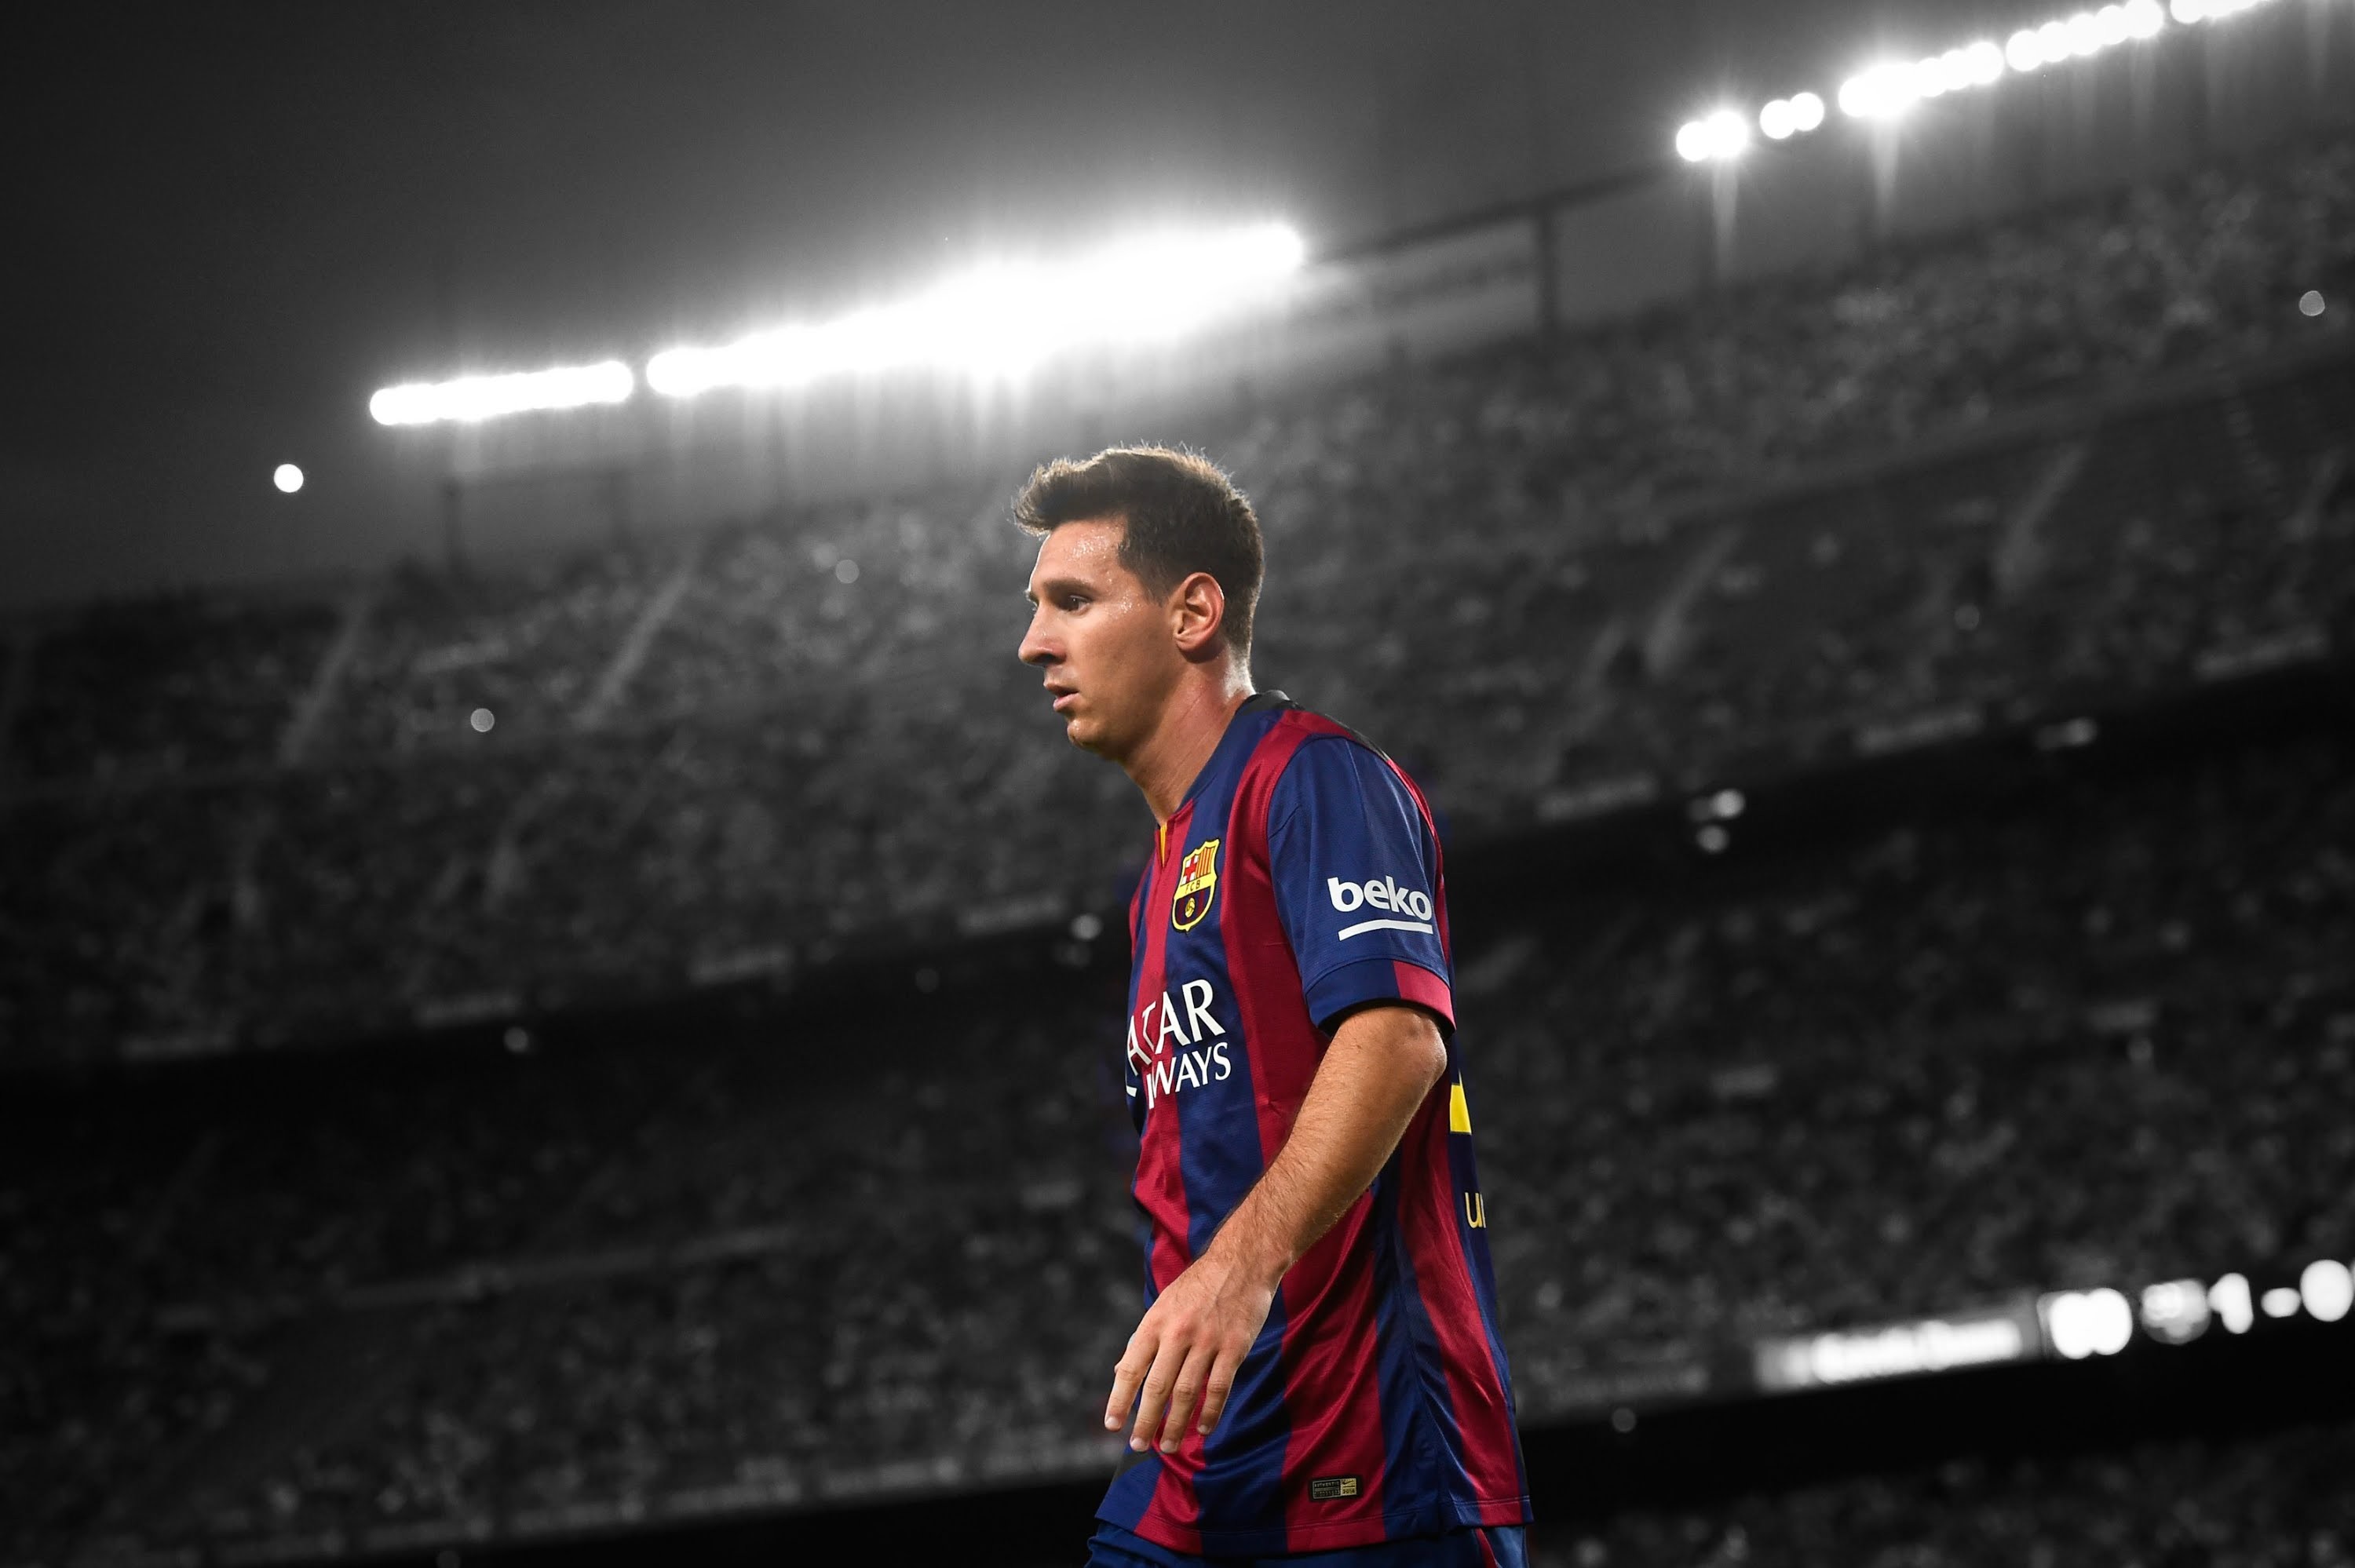 Lionel Messi Wallpaper HD Download Free download latest Lionel